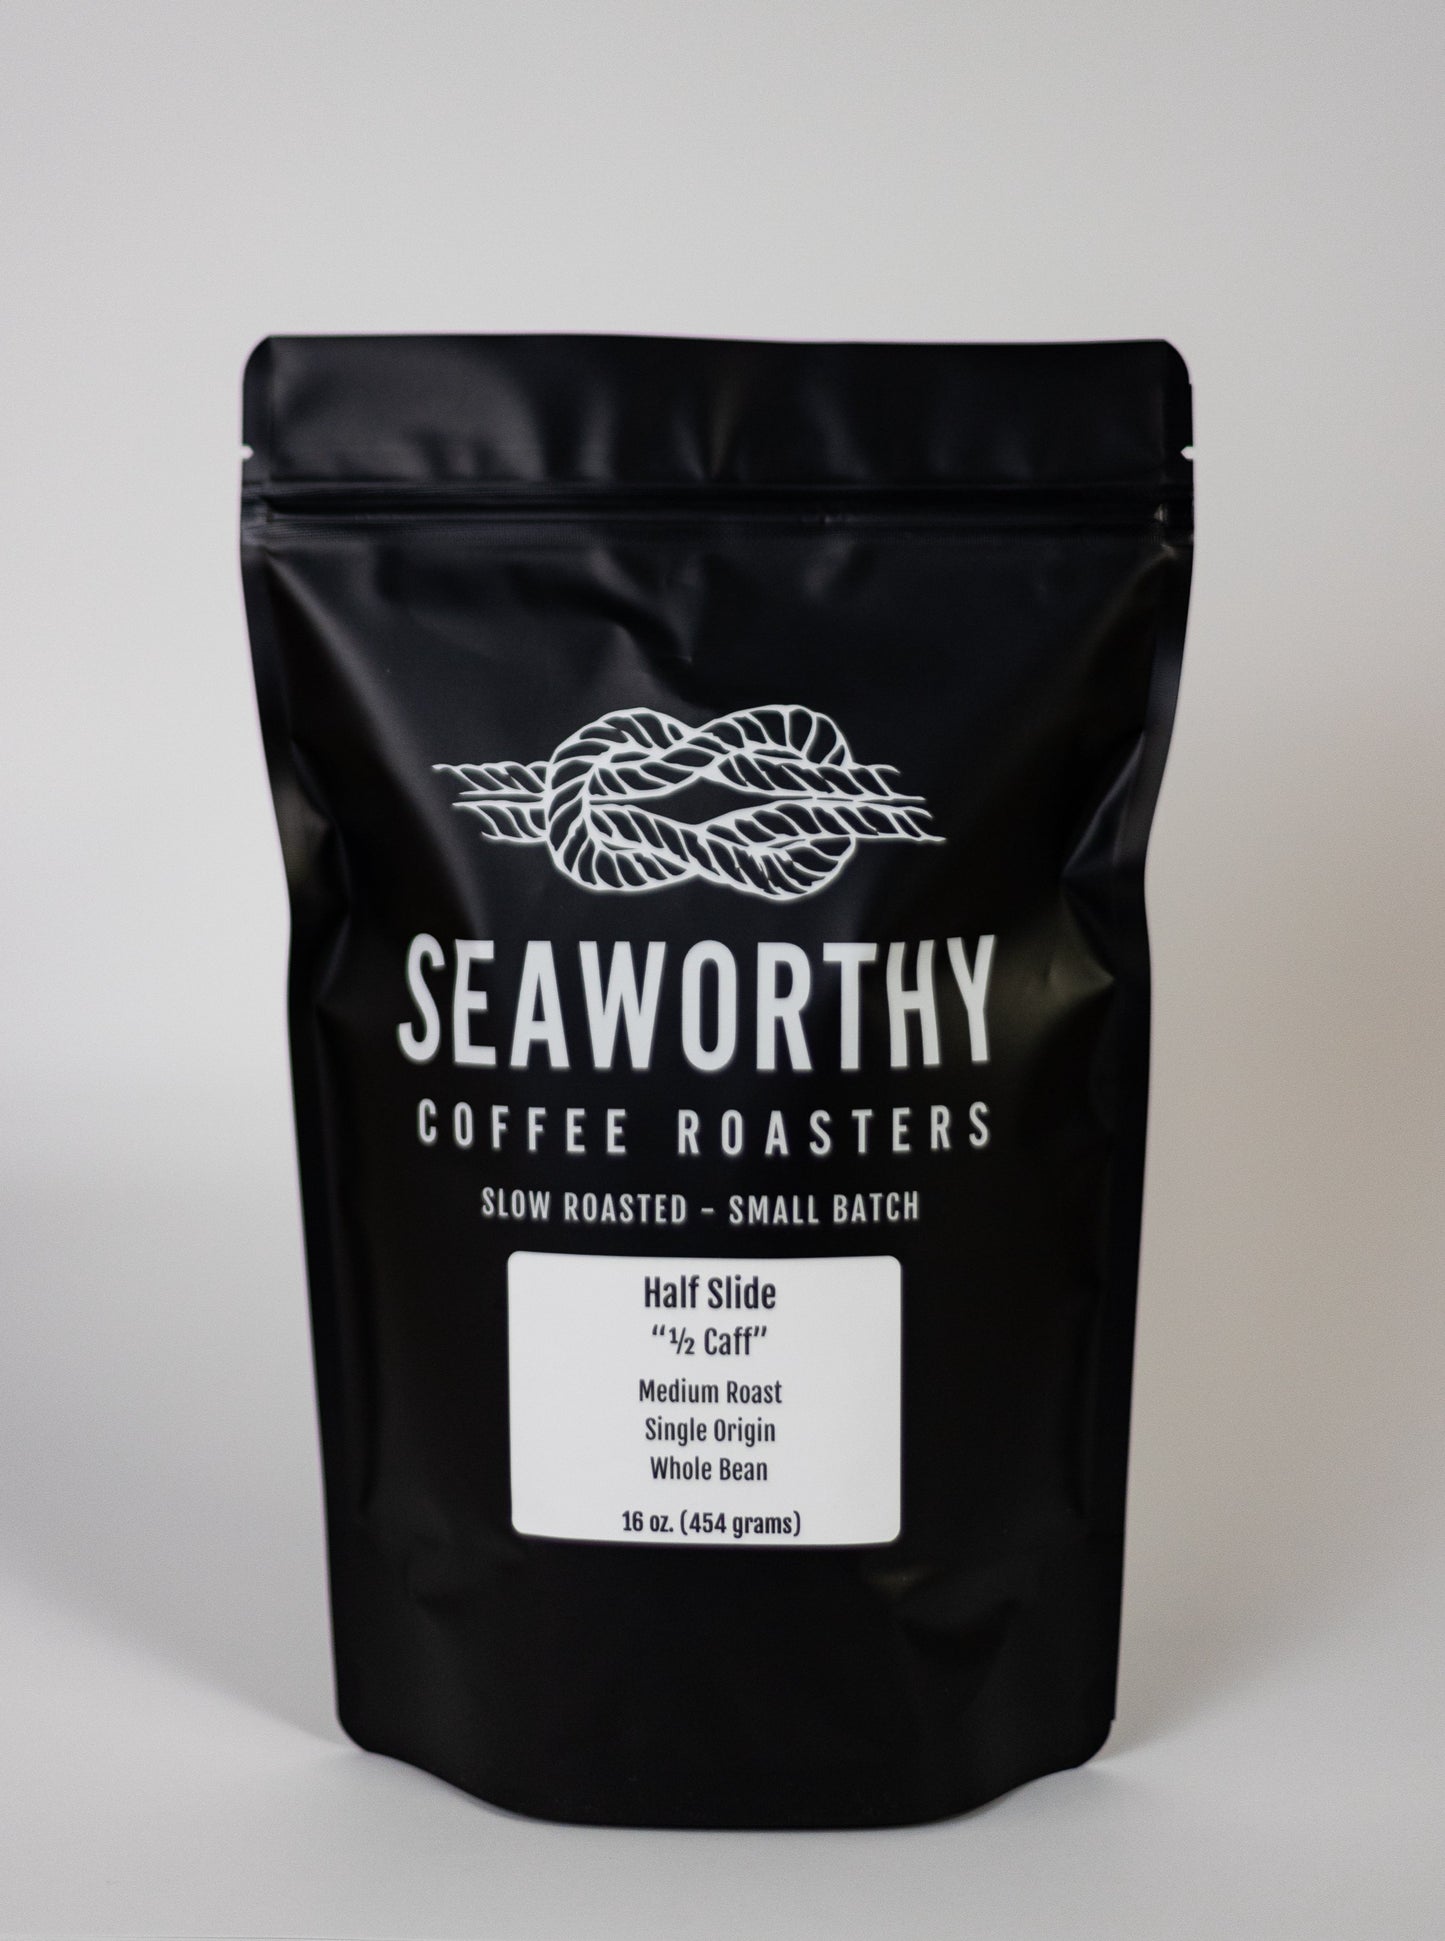 Seaworthy slow roasted, small batch, low acid coffee. 1 pound bag of Half Slide medium roast specialty half decaf coffee.